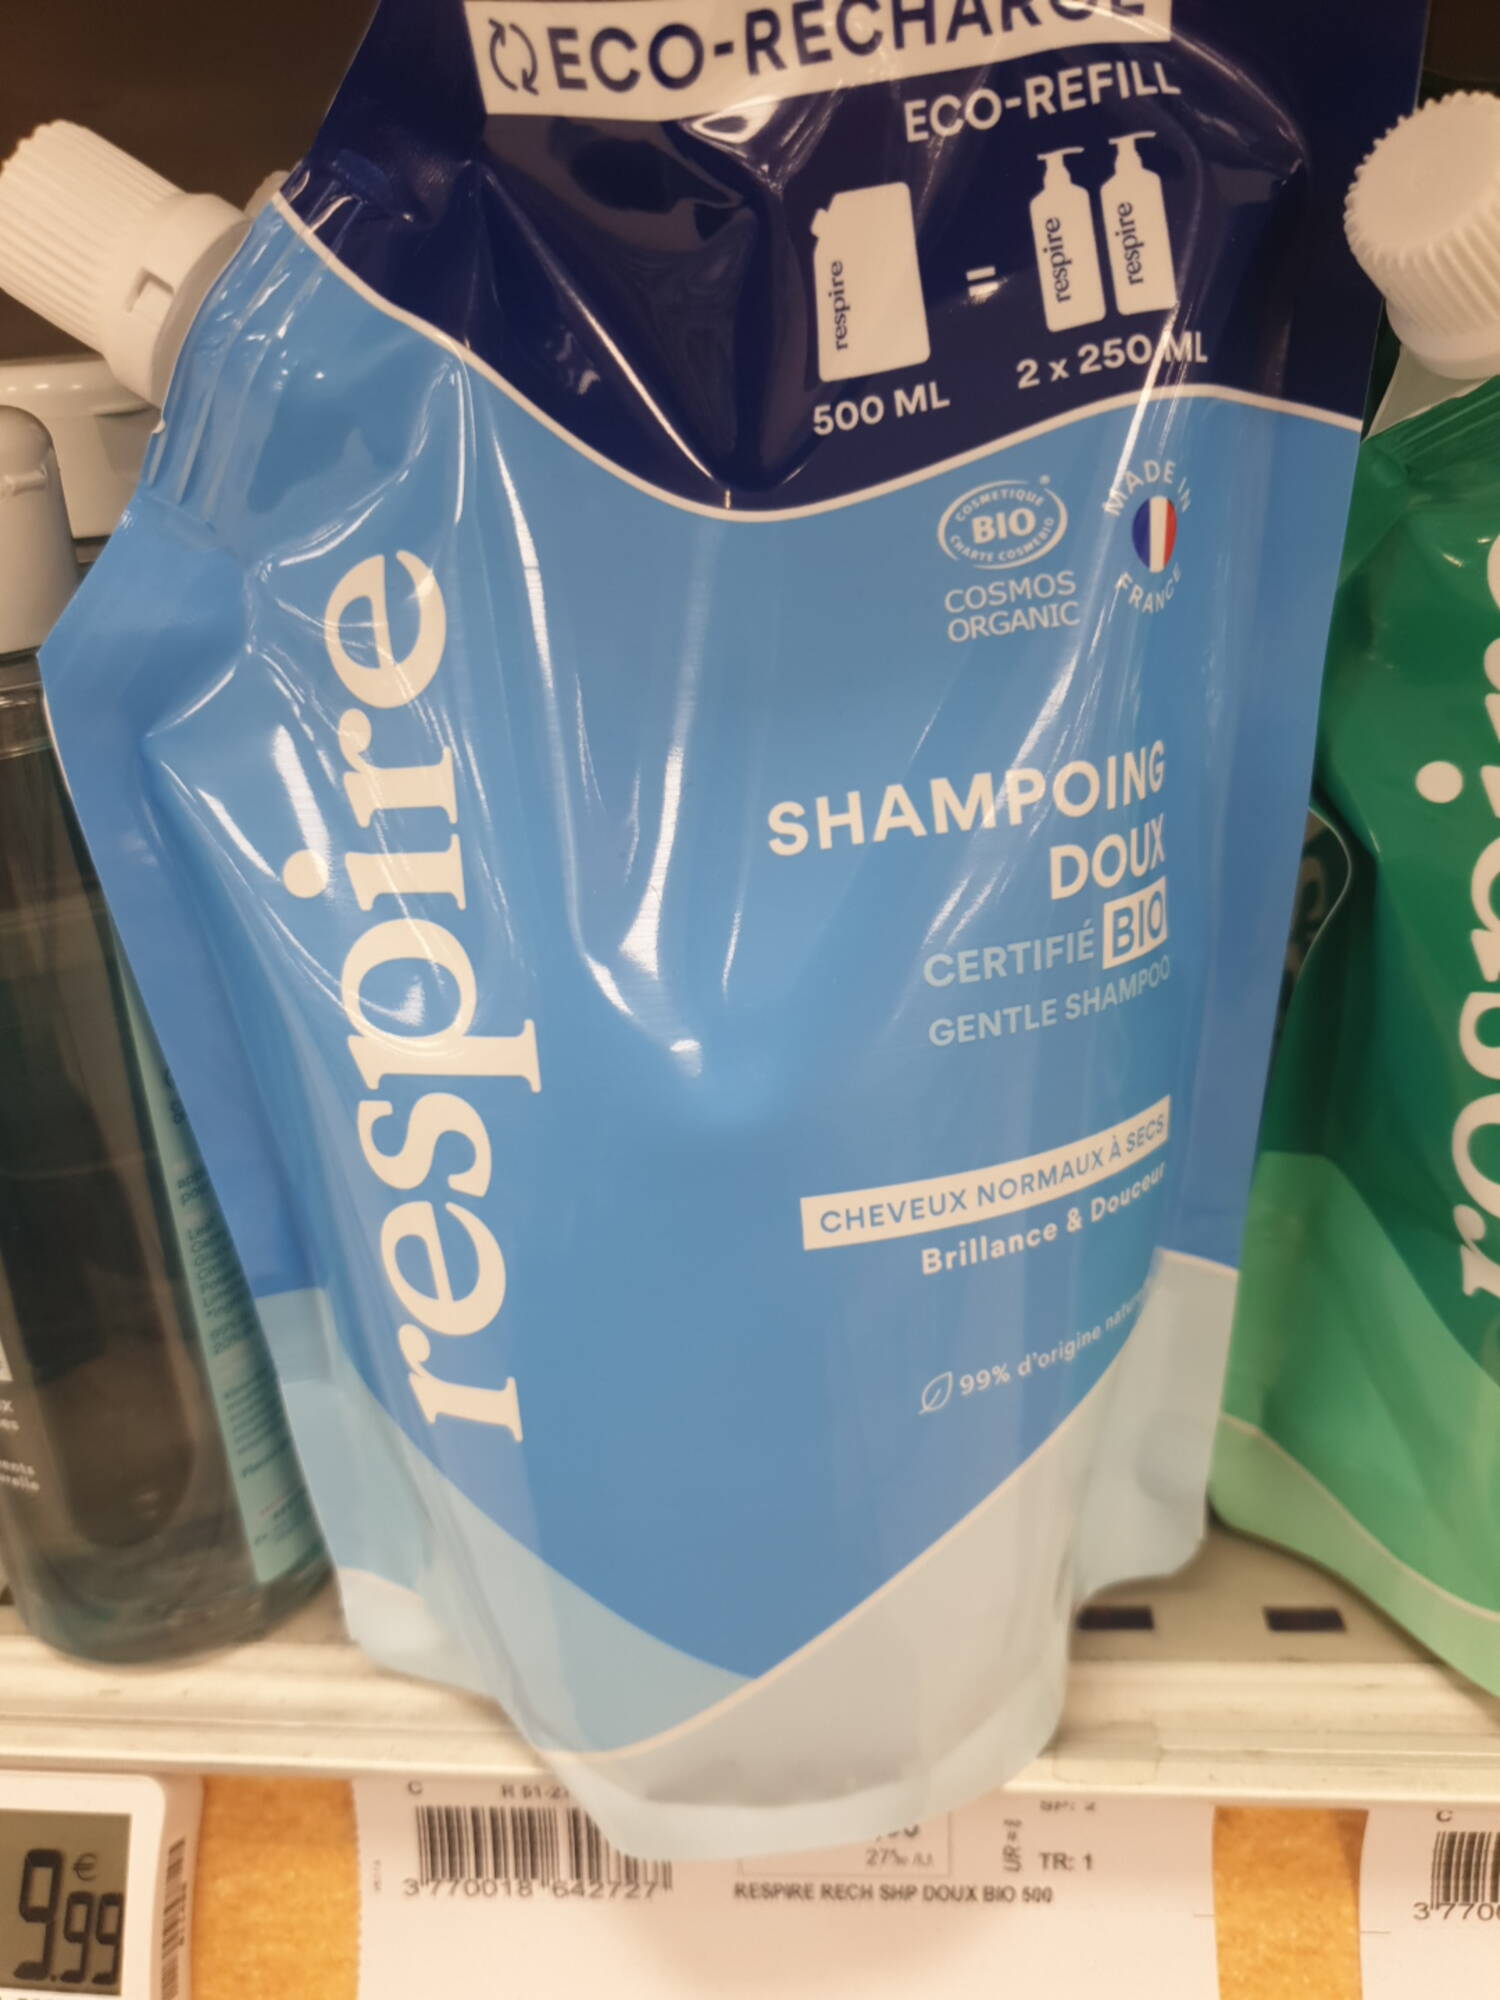 RESPIRE - Recharge shampoing doux bio